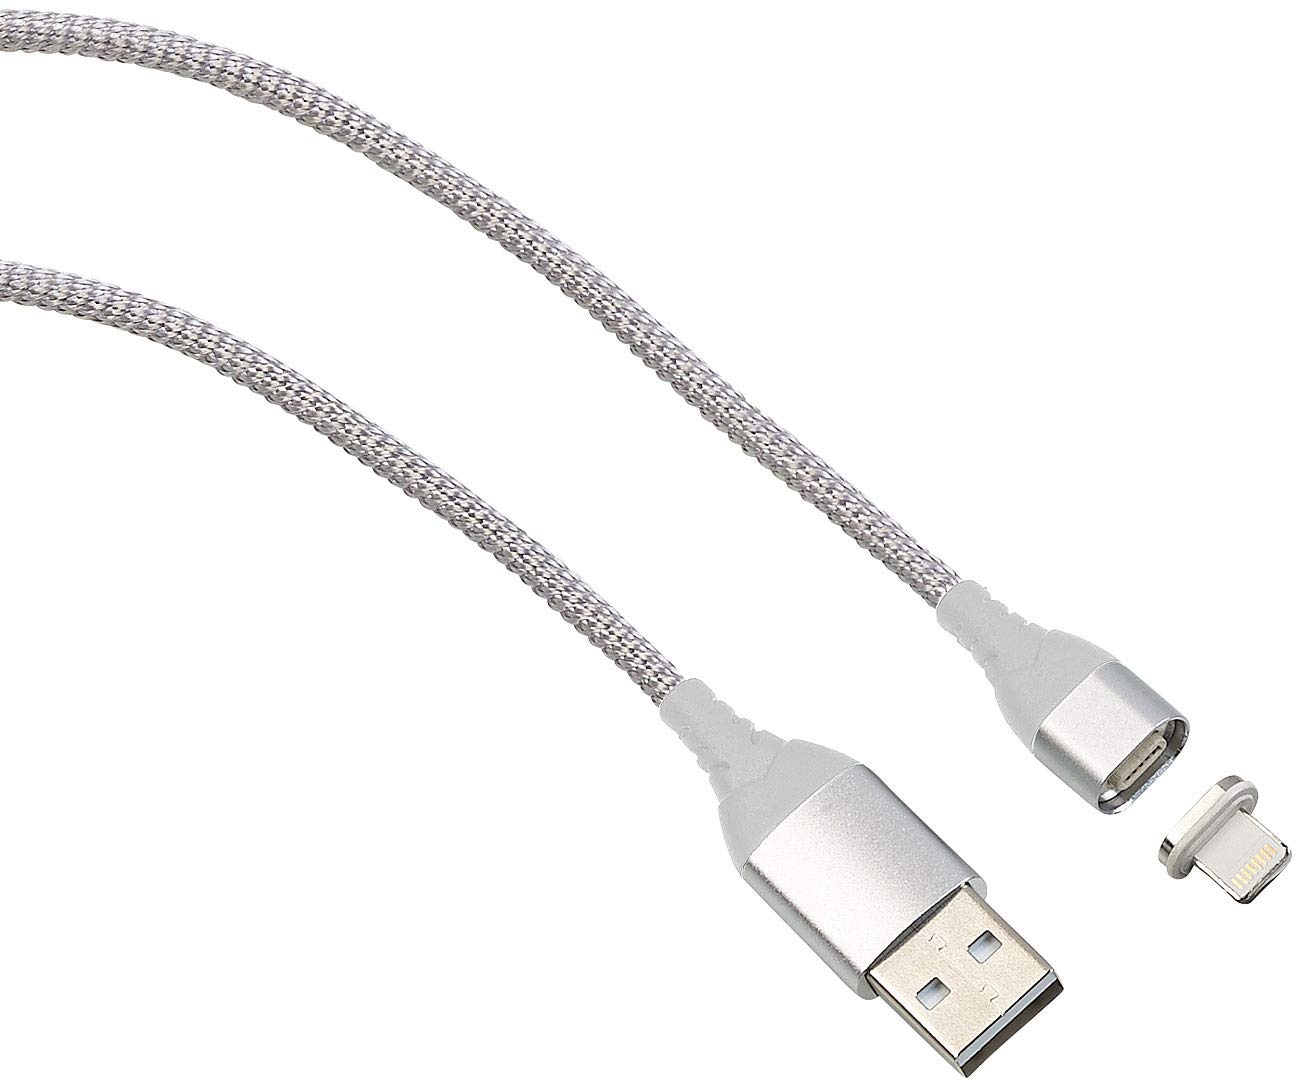 Callstel Ladekabel kompatibel zu iPhone: USB-Lade- & Datenkabel mit magnetischem Lightning-Stecker, 1 m, Silber (iPad Adapter, Magnet-Ladekabel iPad, Micro Computer Android)